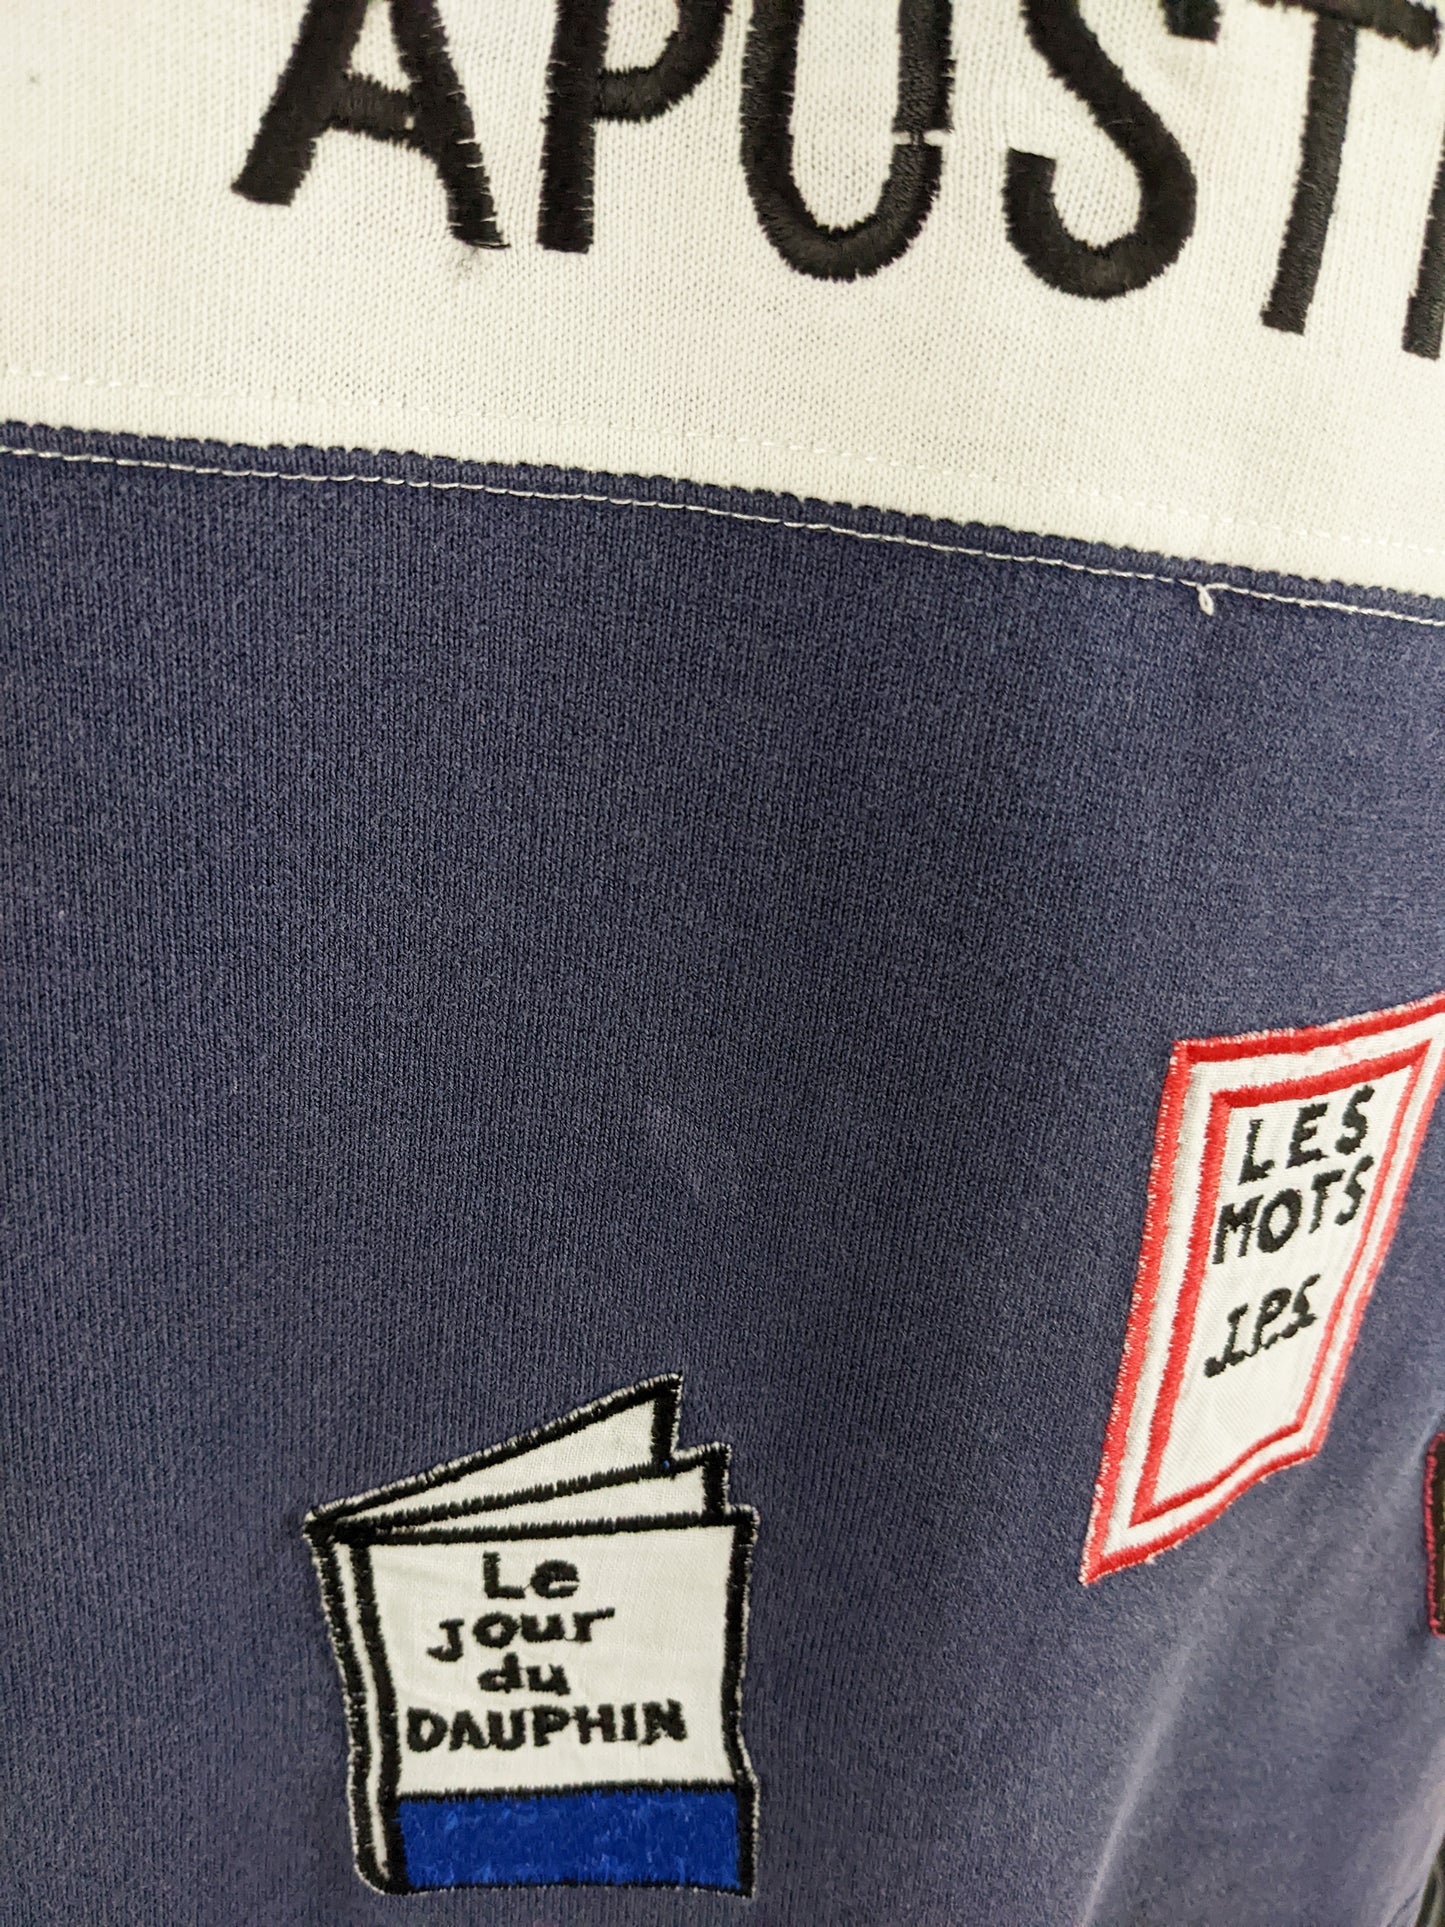 JC de Castelbajac Vintage Mens T Shirt with Literary Dolphin, 1980s